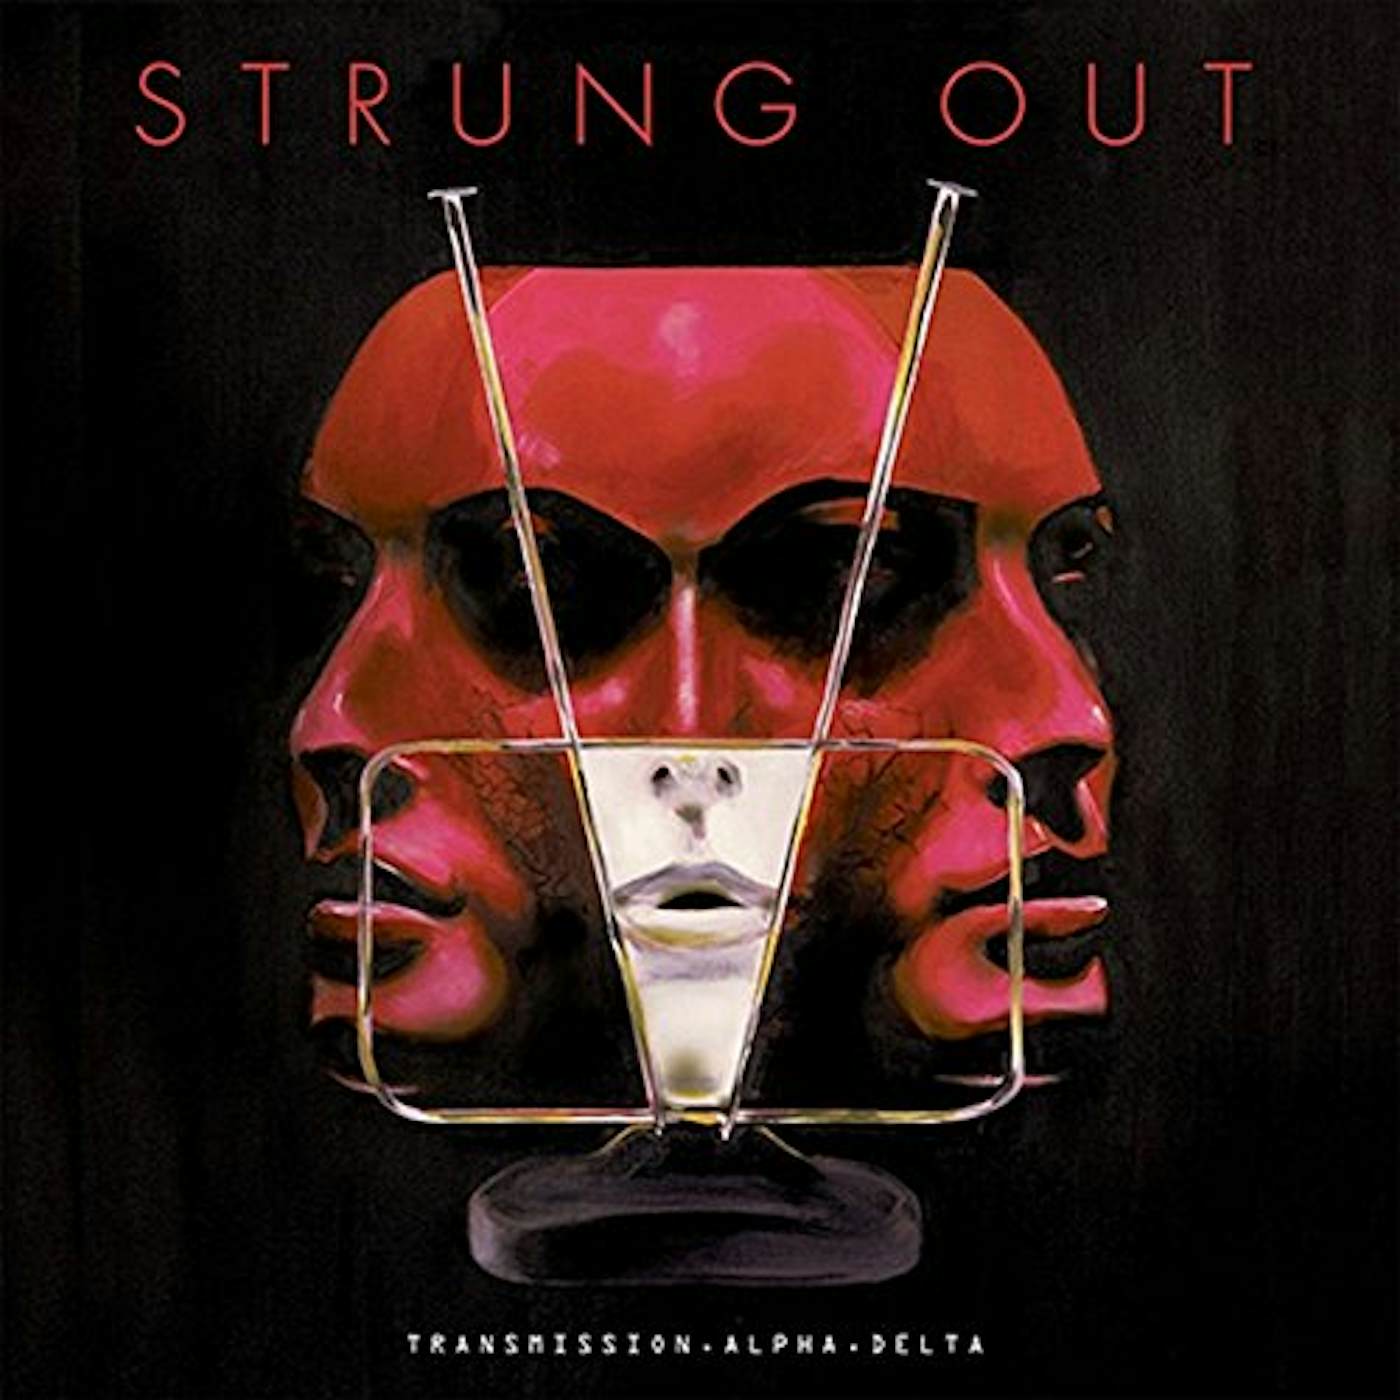 Strung Out Transmission.Alpha.Delta Vinyl Record